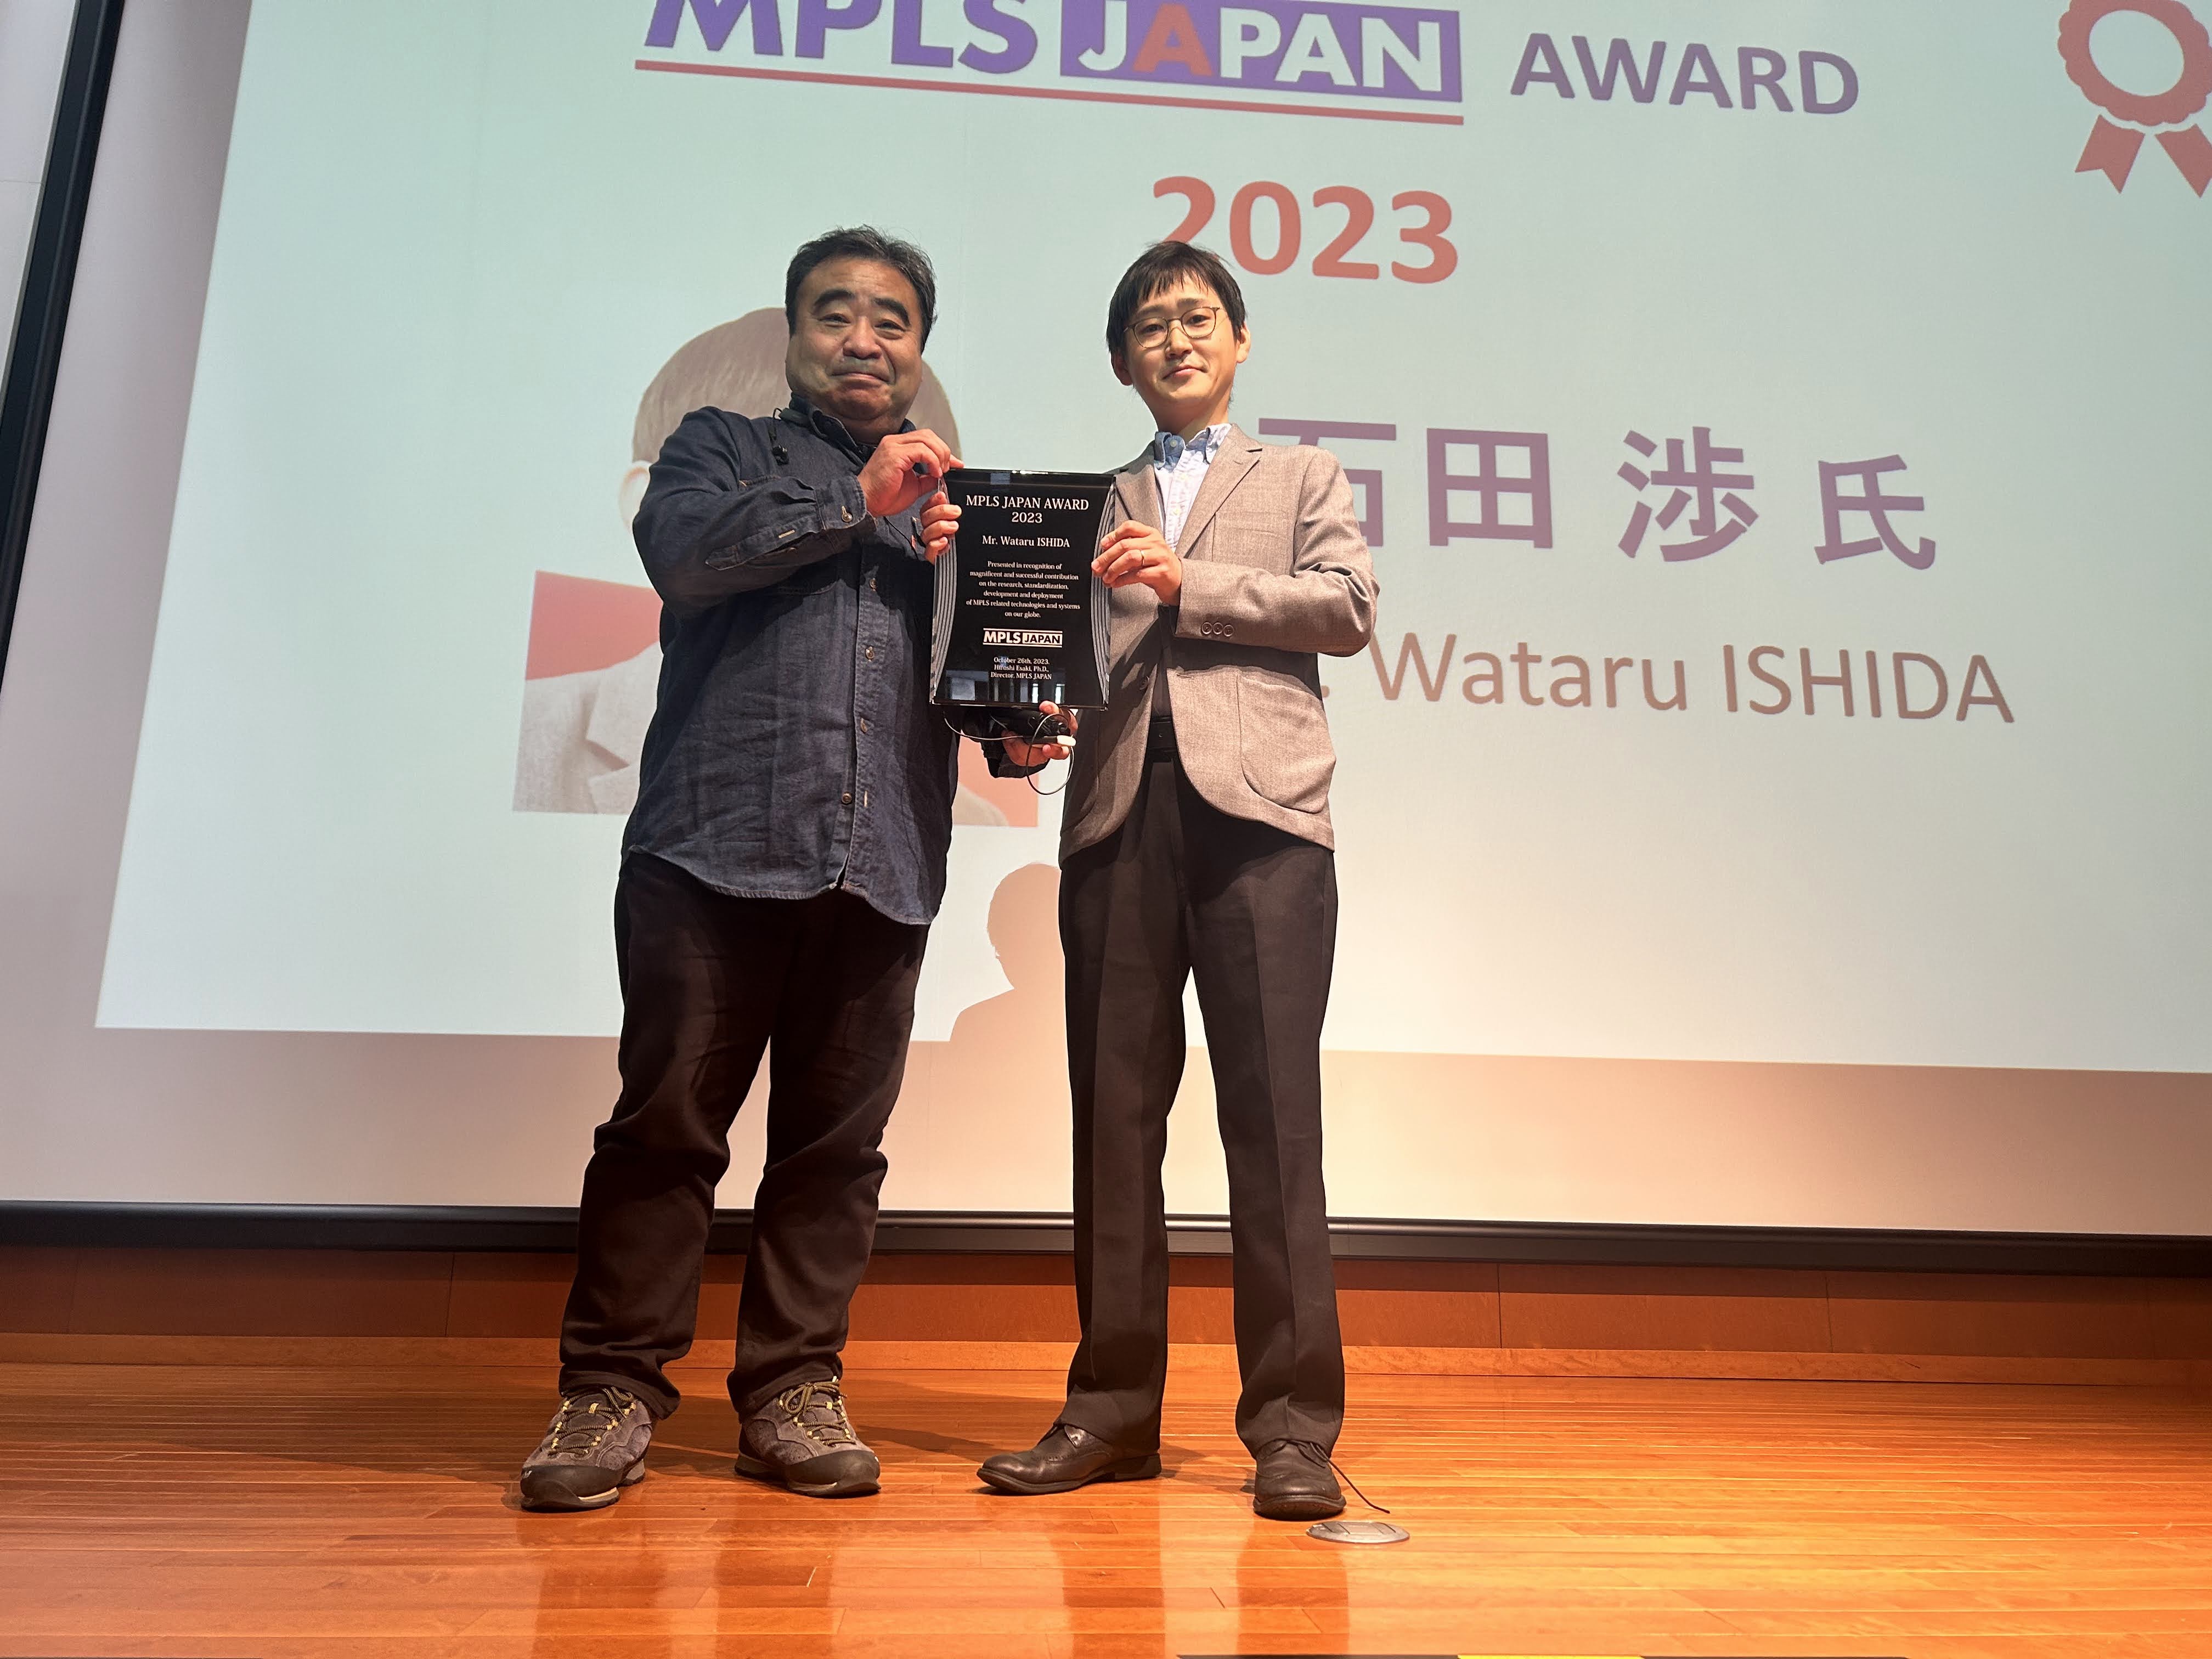 MPLS JAPAN Award 2023 winners